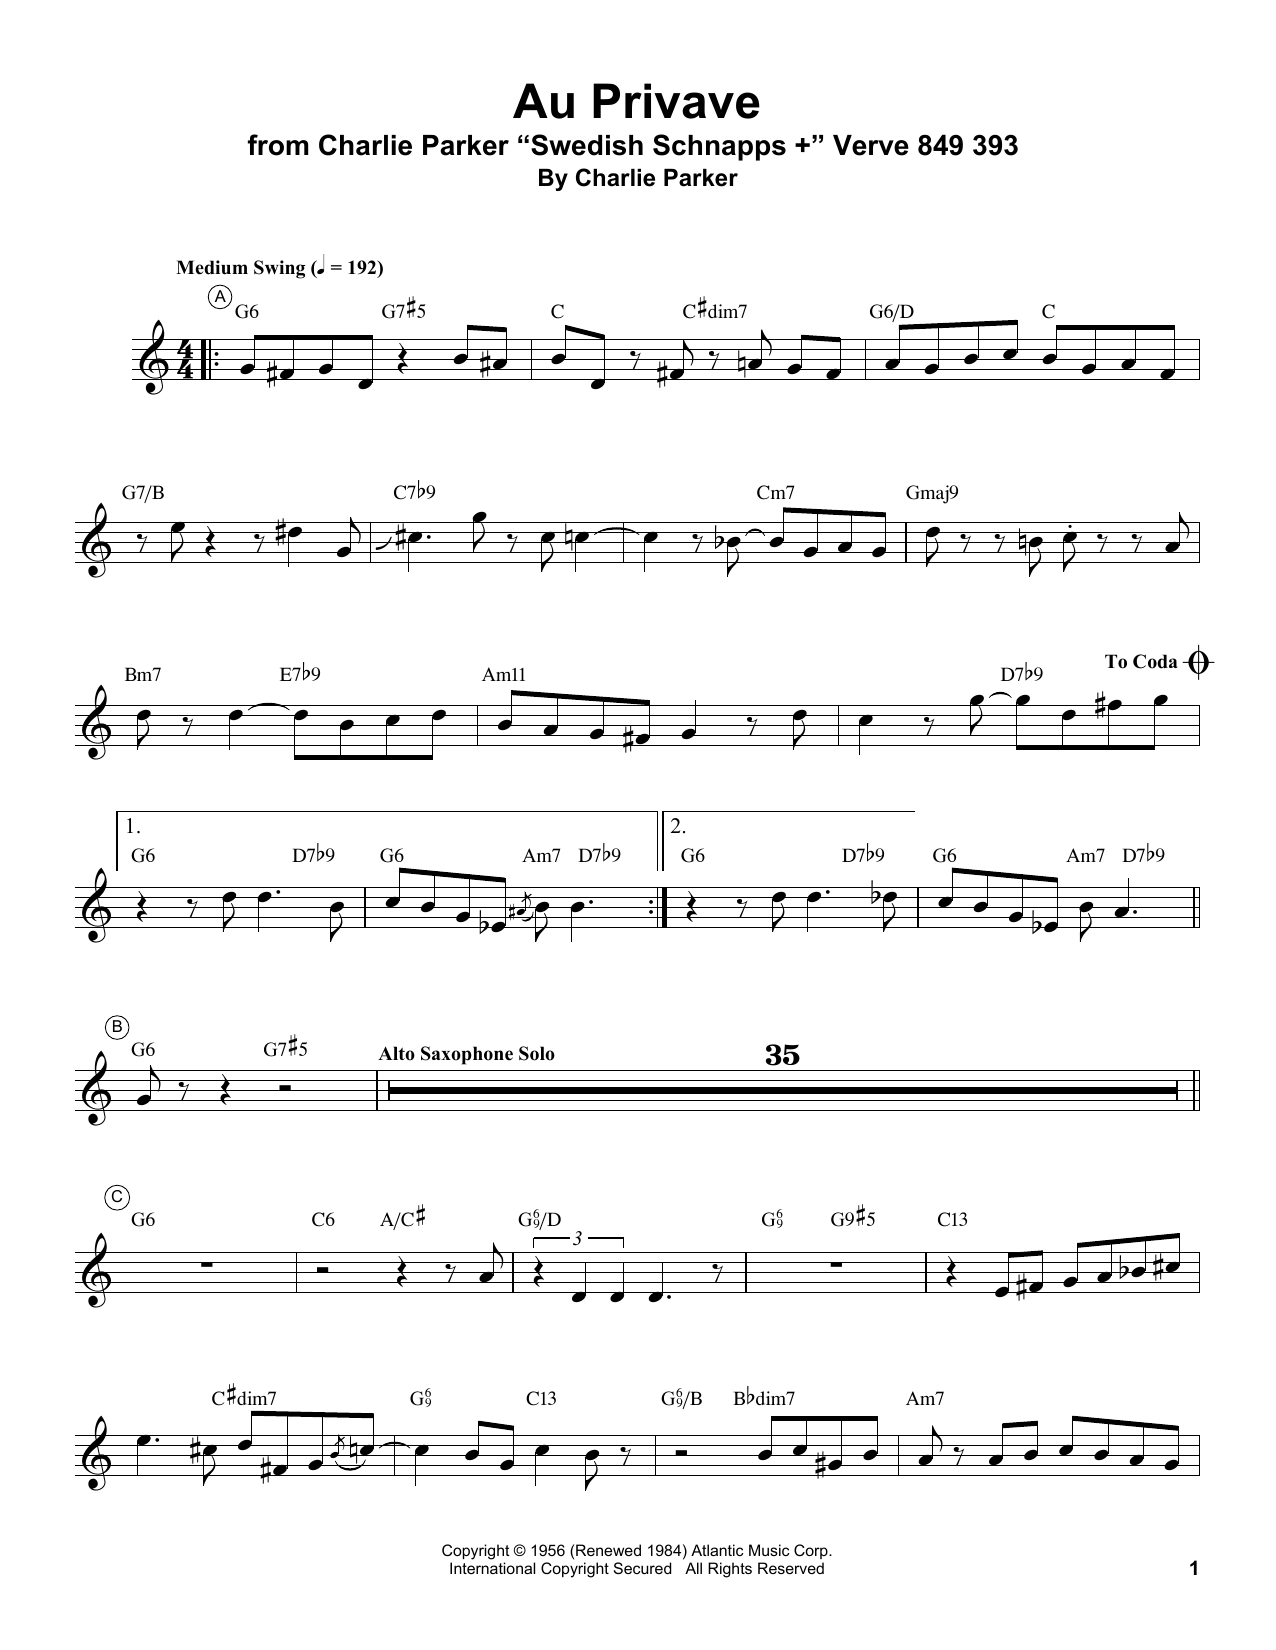 Miles Davis Au Privave Sheet Music Notes & Chords for Trumpet Transcription - Download or Print PDF